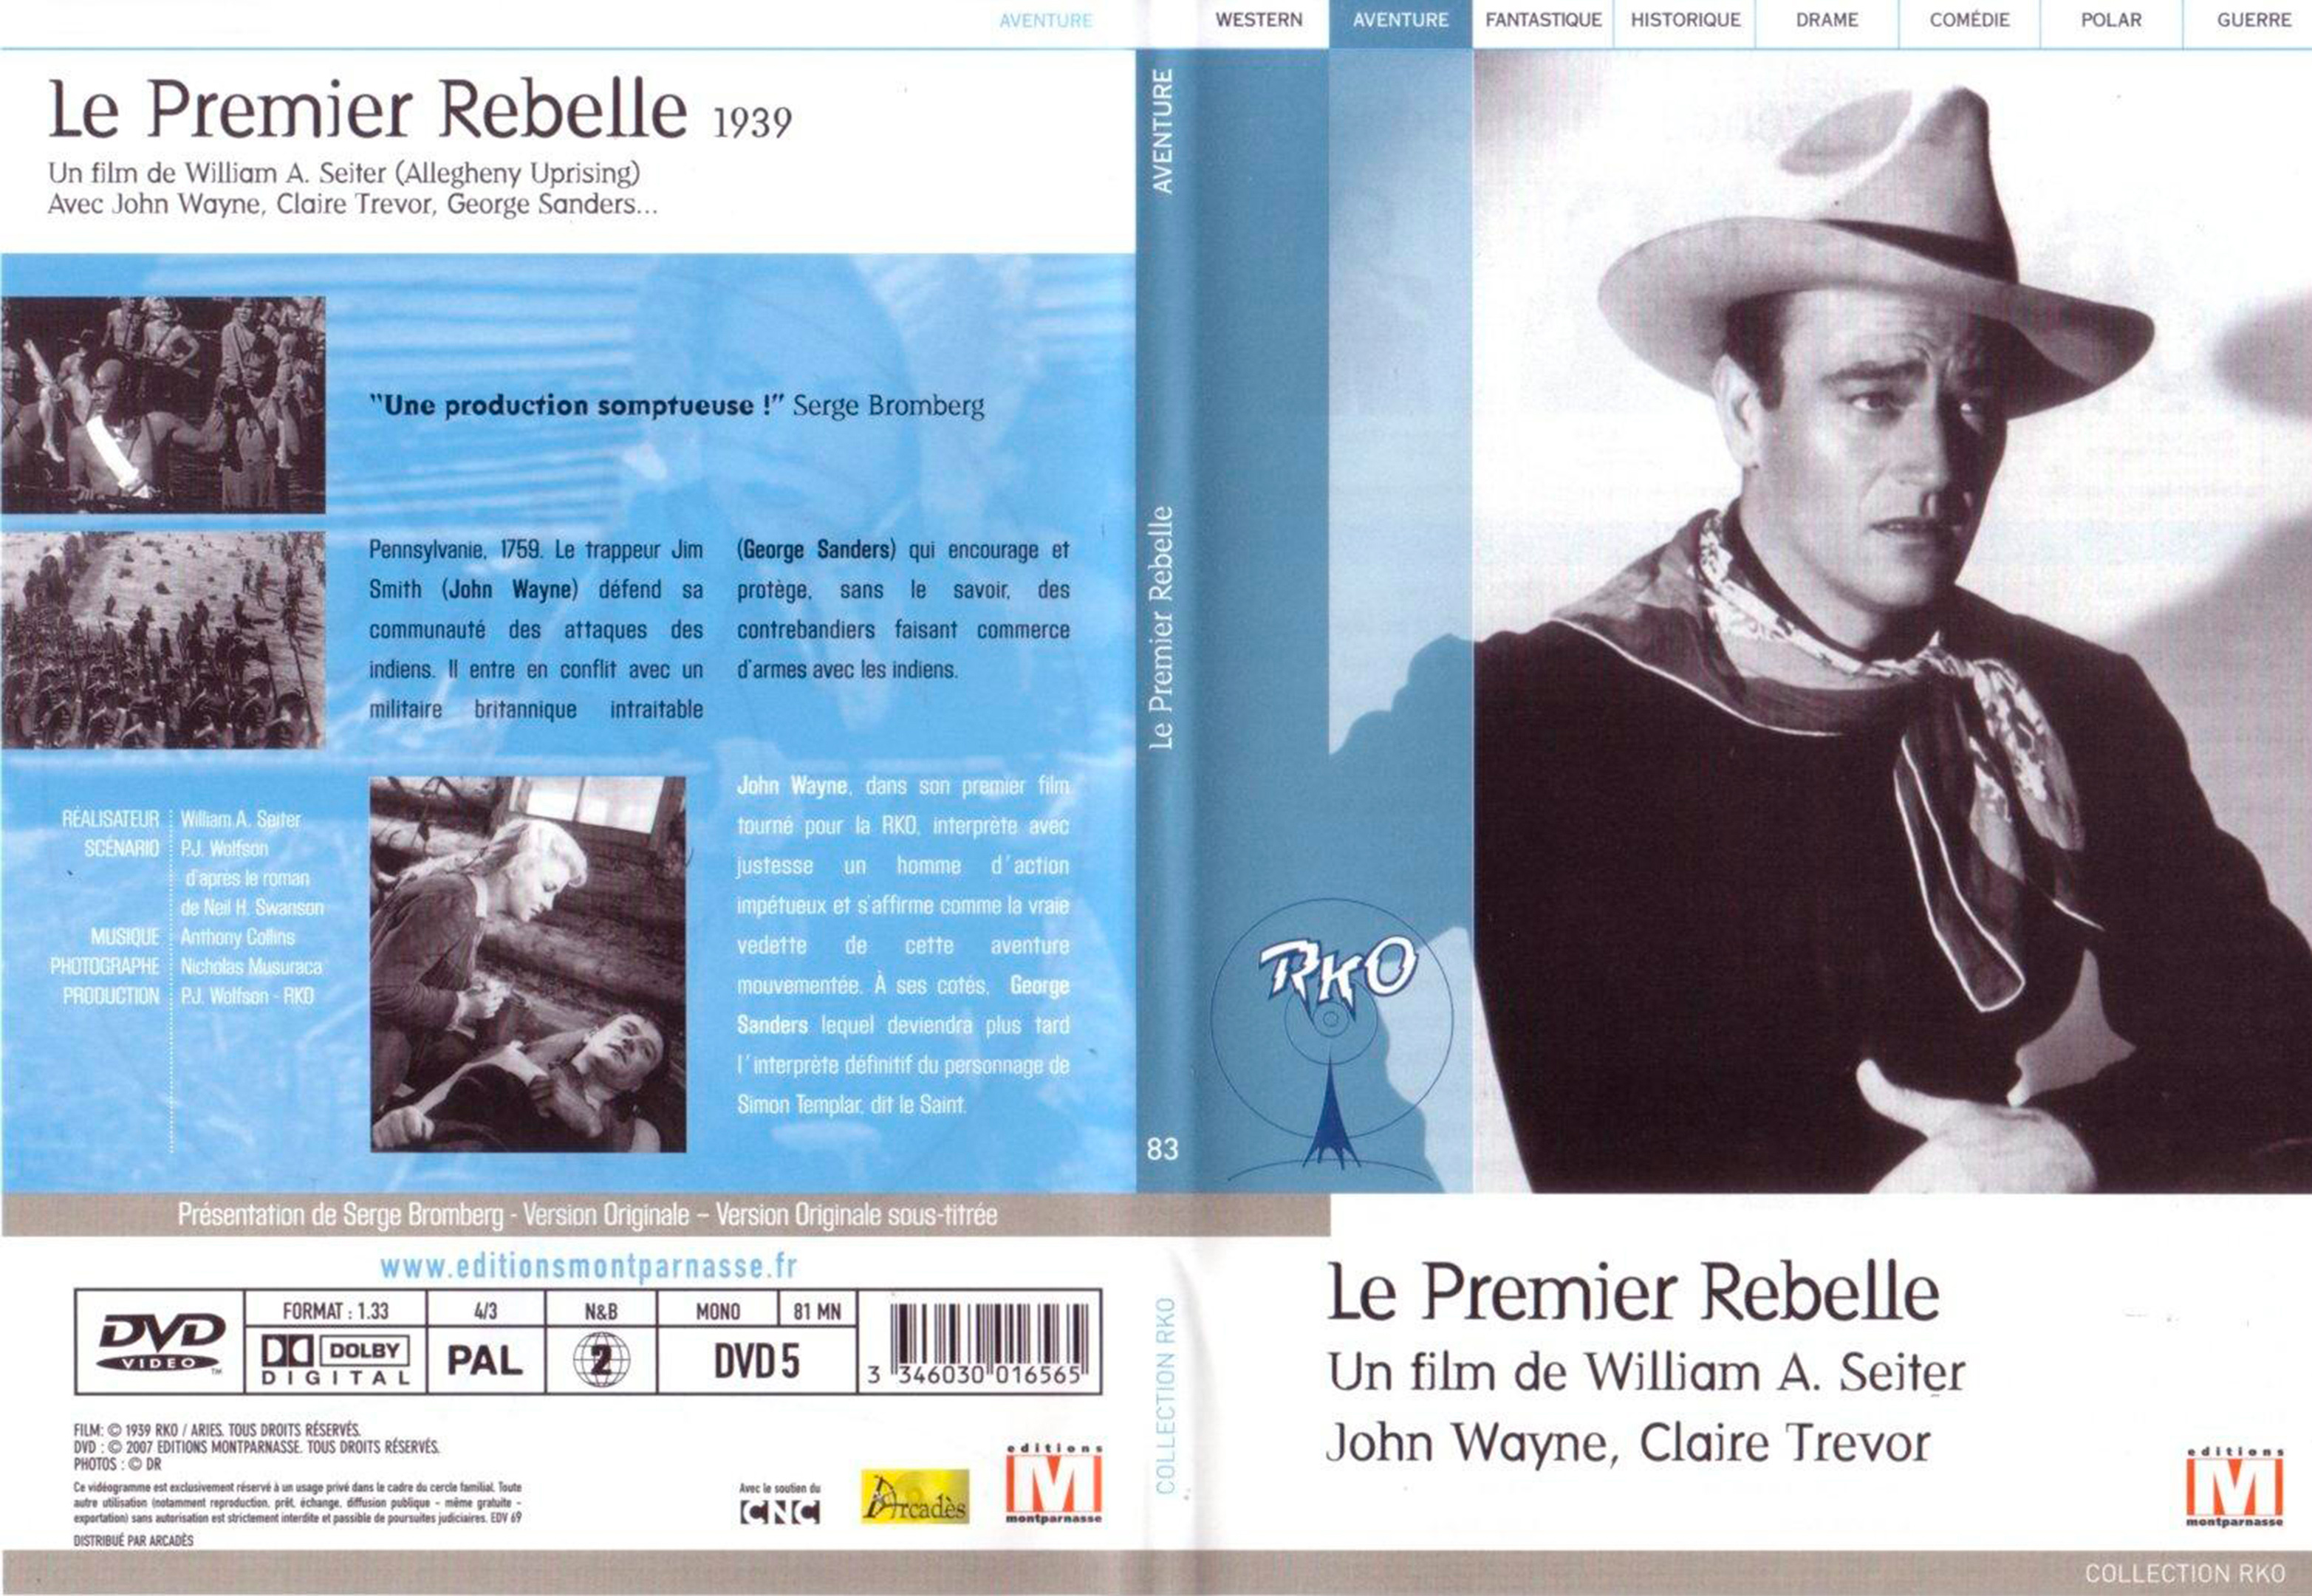 Jaquette DVD Le premier rebelle v2